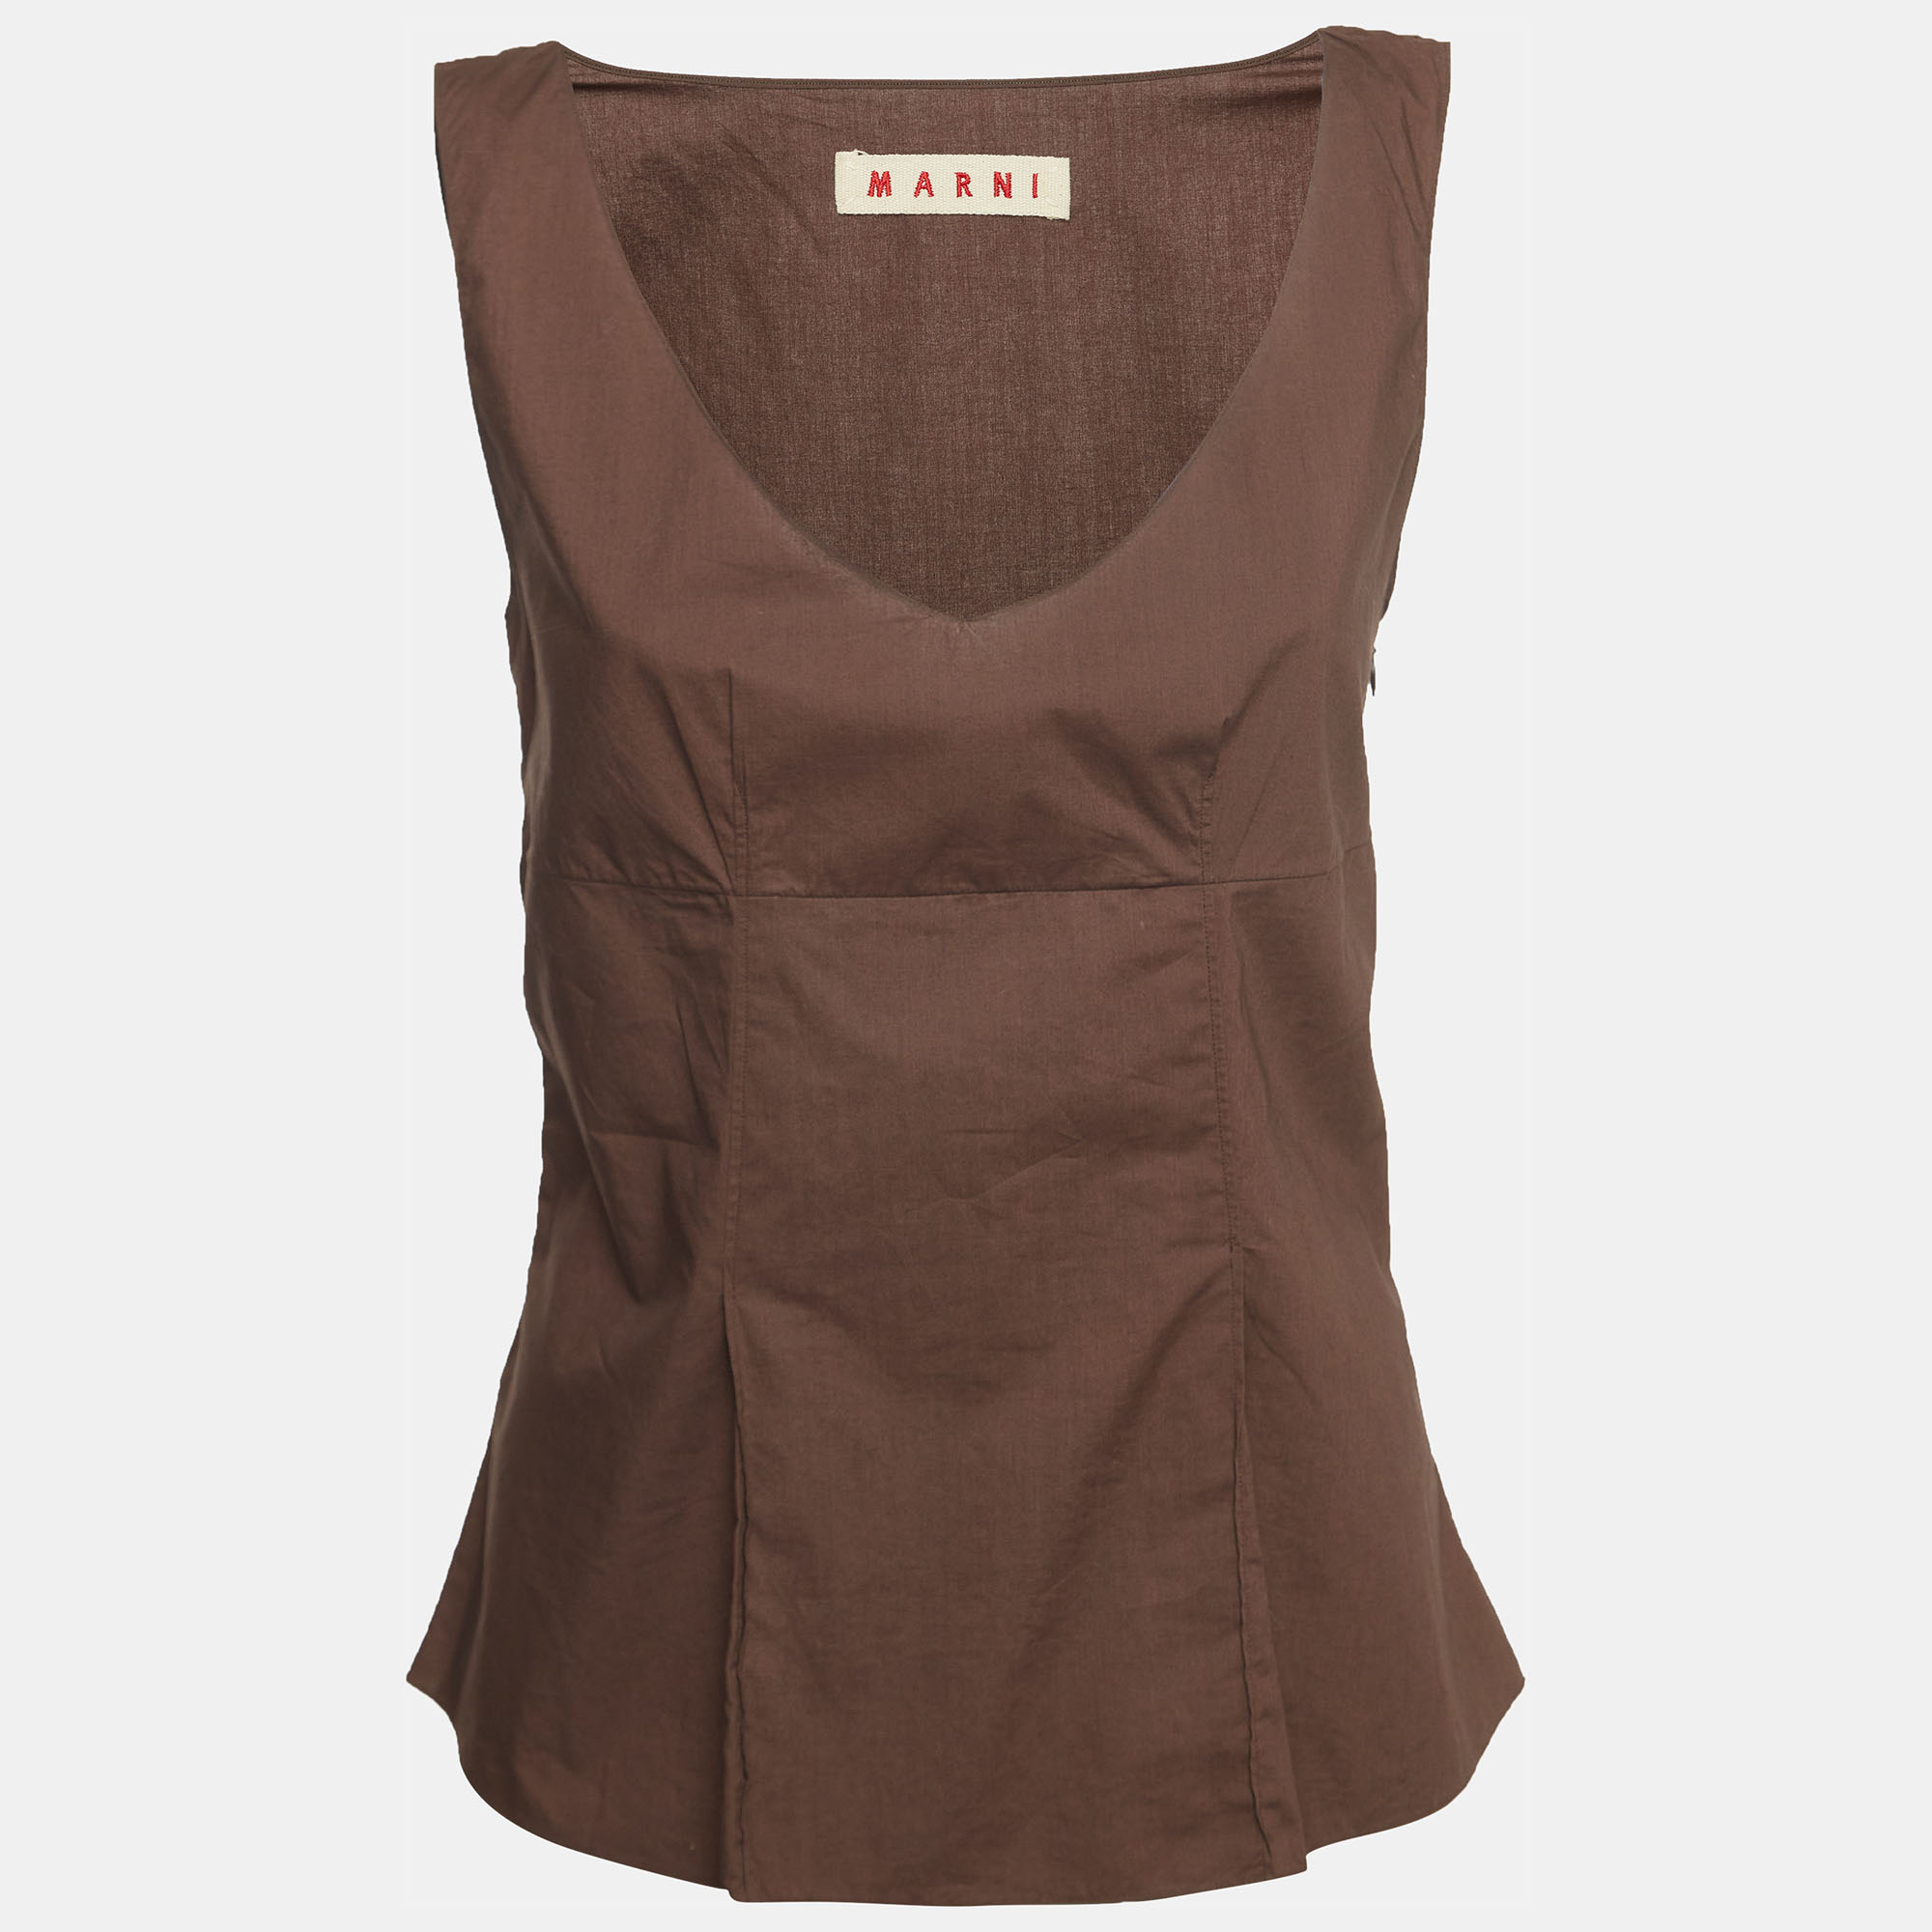 Marni brown cotton v-neck sleeveless top s